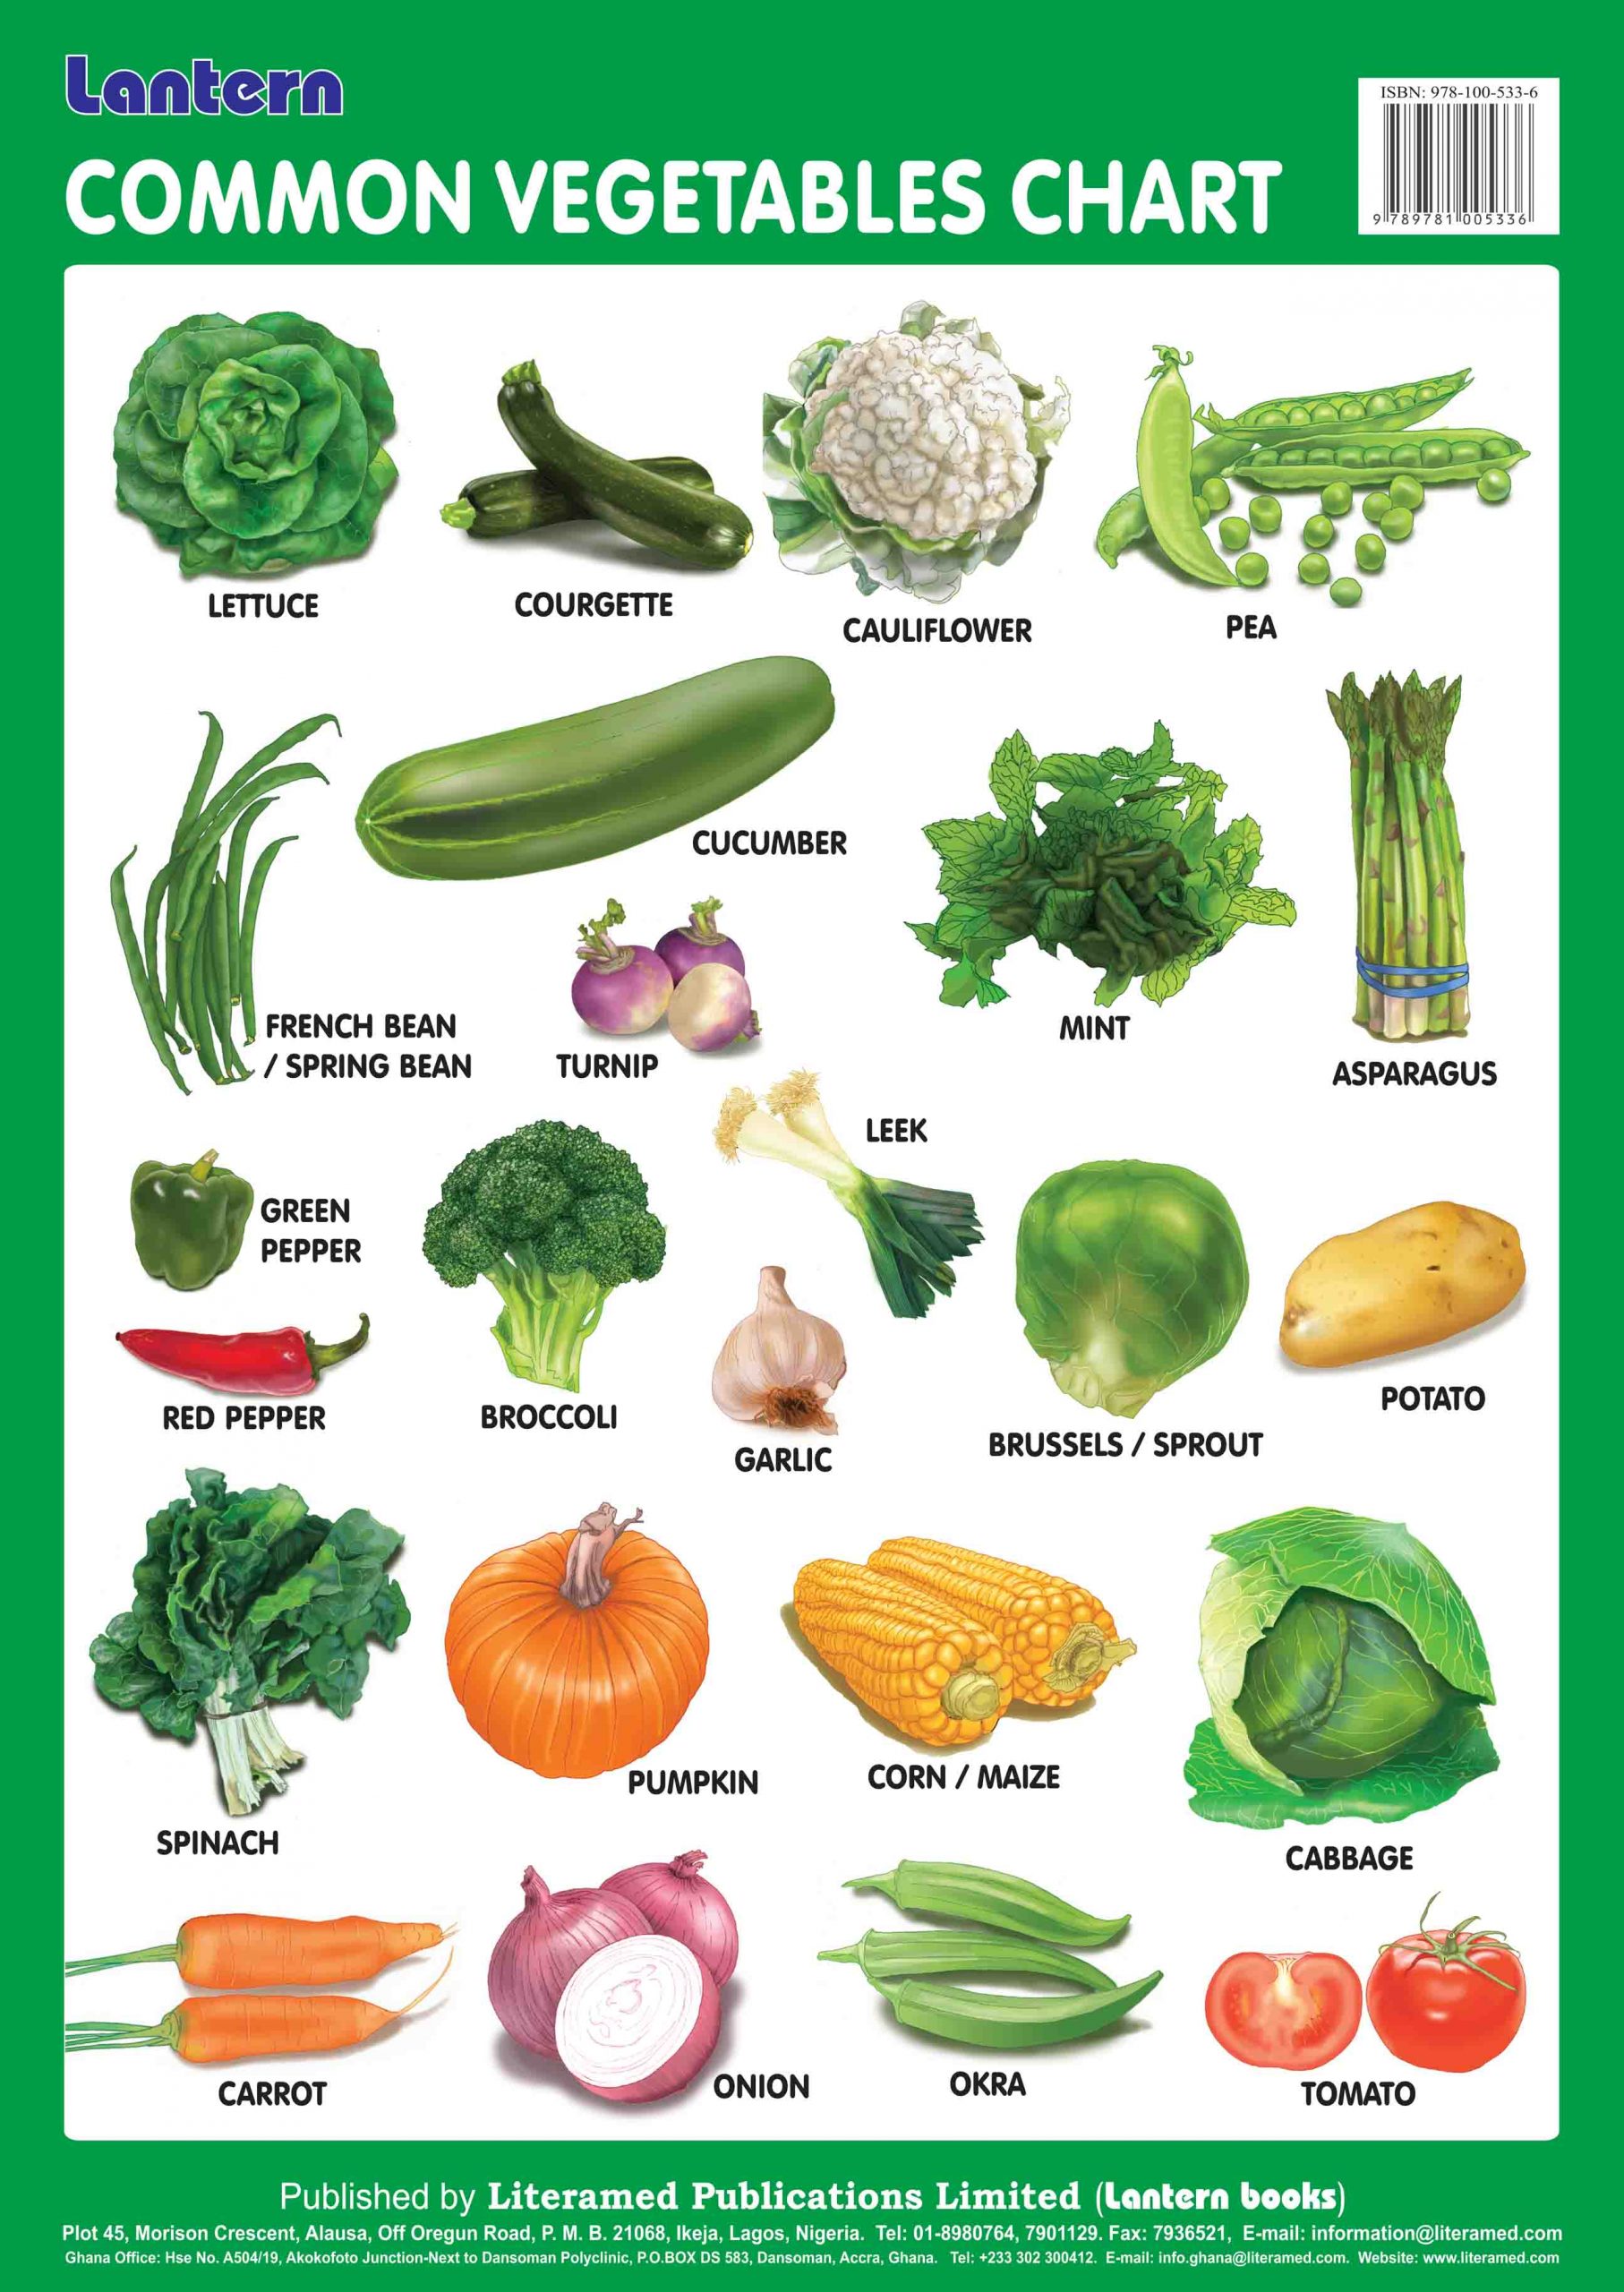 wall-chart-common-vegetables-lantern-books-977